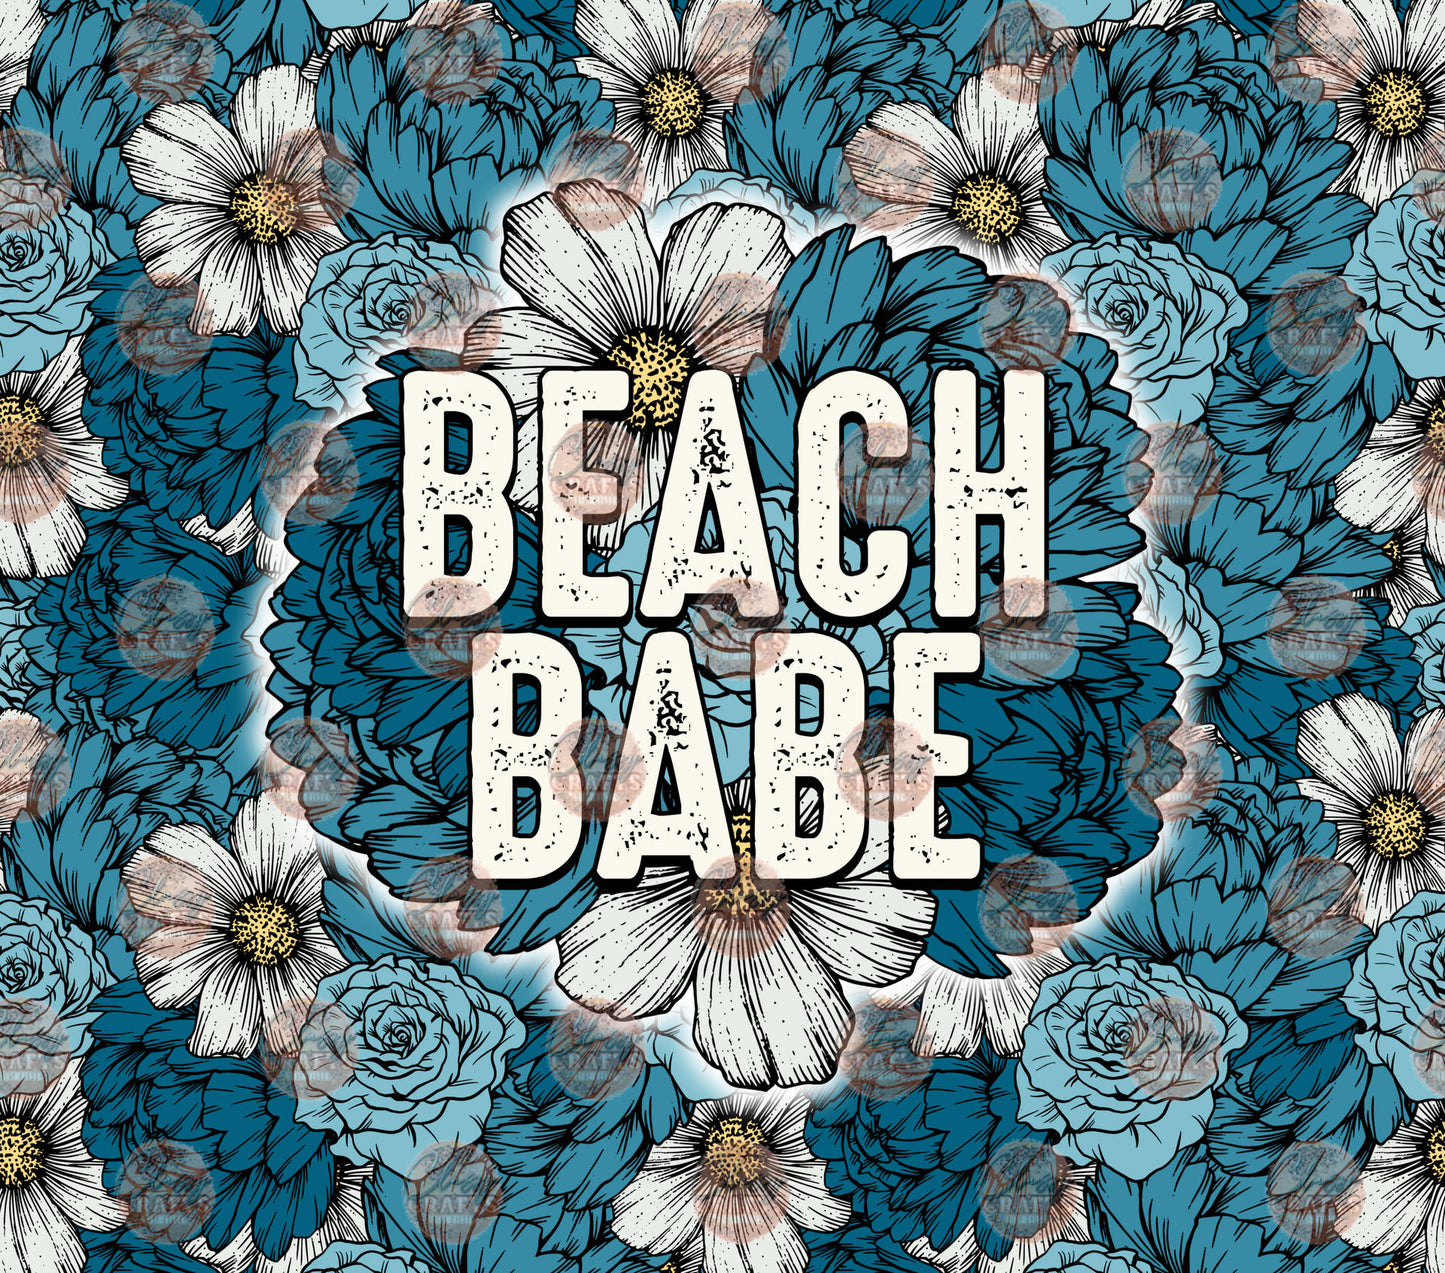 Blue Floral Beach Babe Tumbler Wrap - Sublimation Transfer